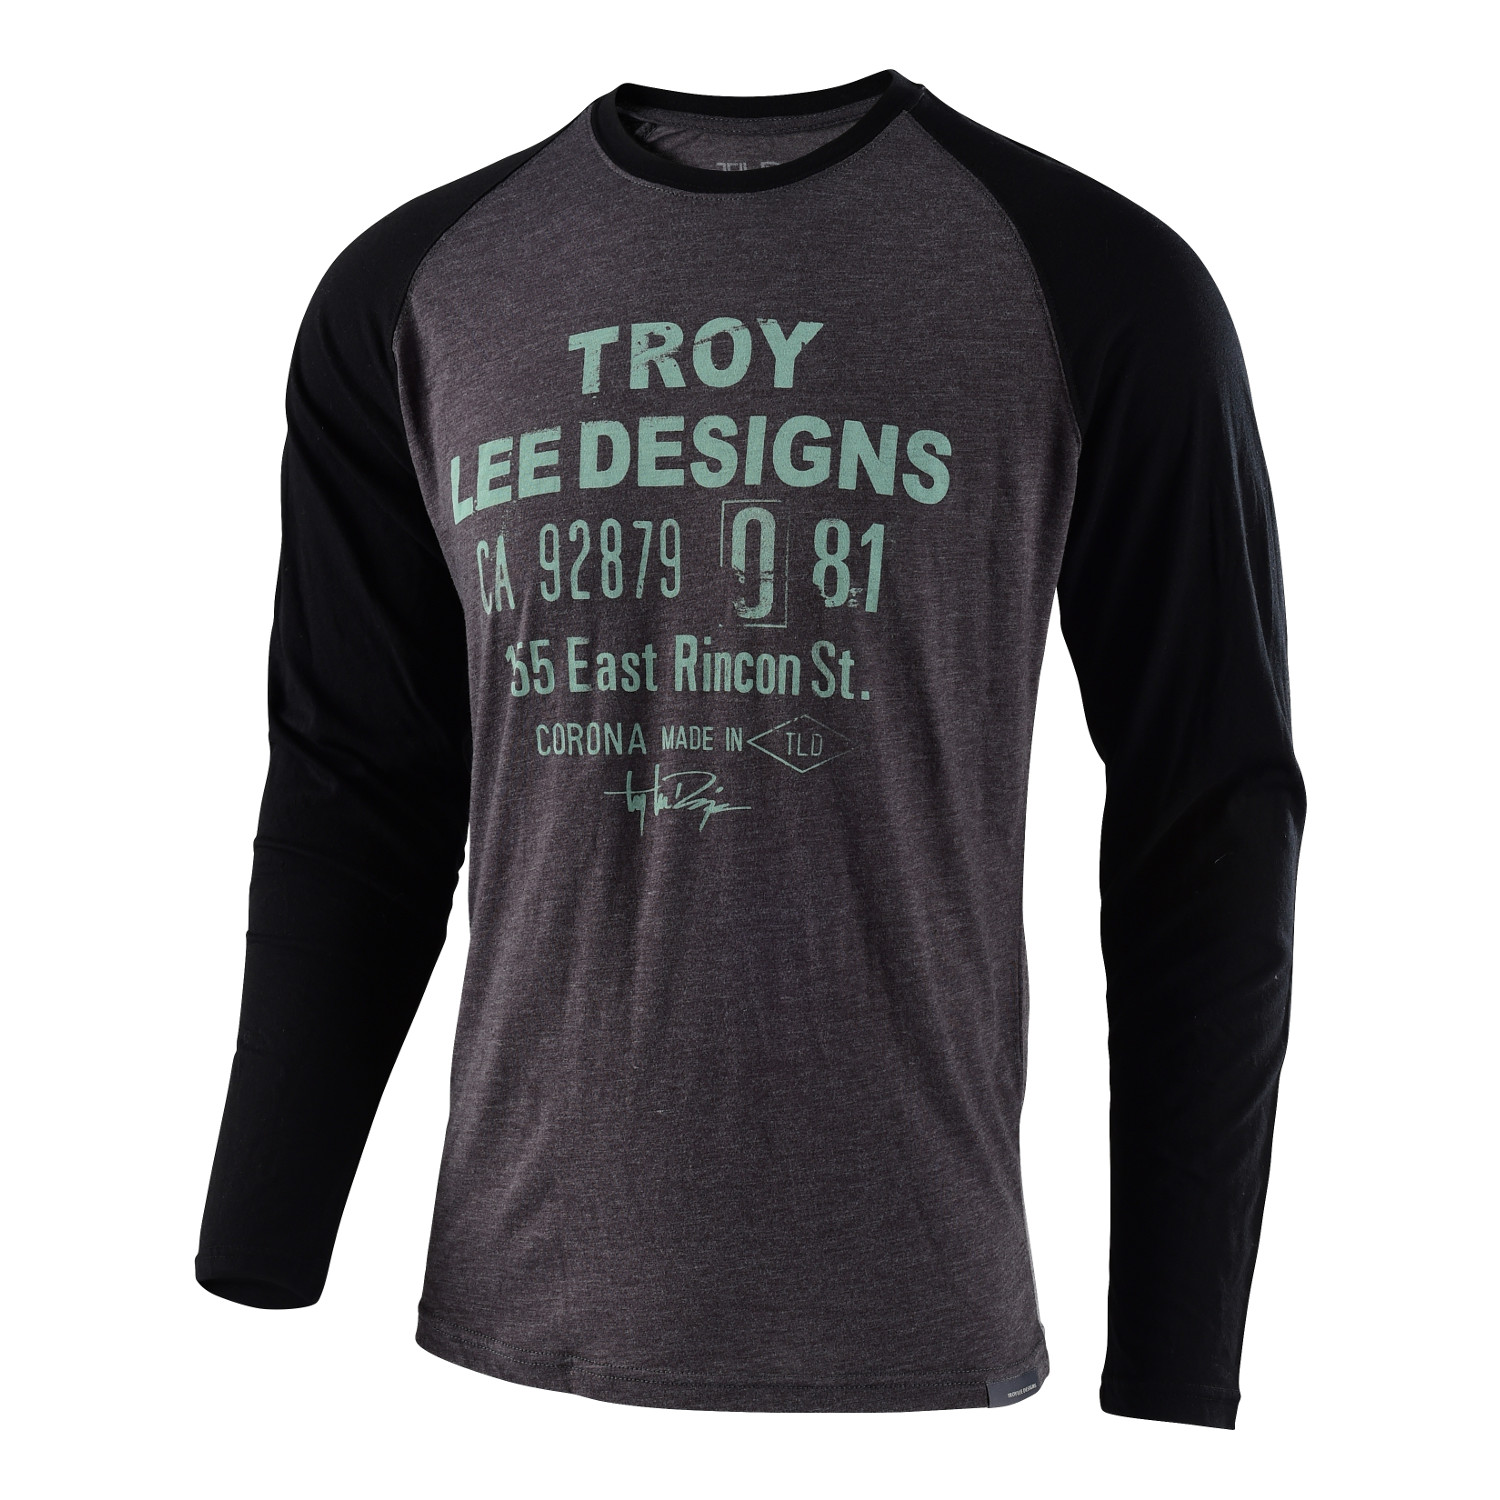 Troy Lee Designs Long Sleeve Cargo Charcoal/Black